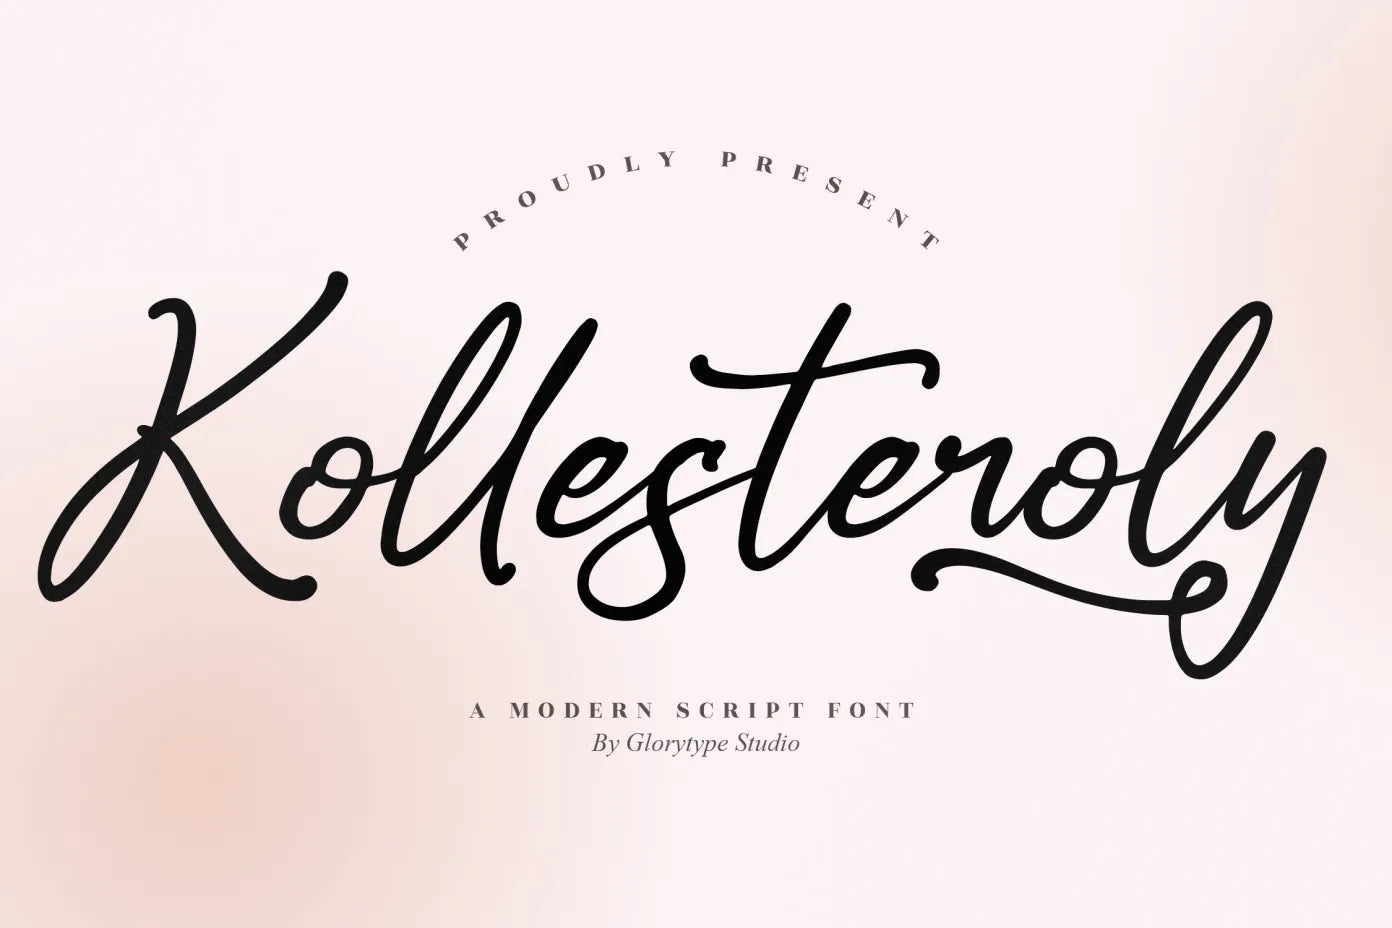 Kollesteroly Free font - Pixellogo